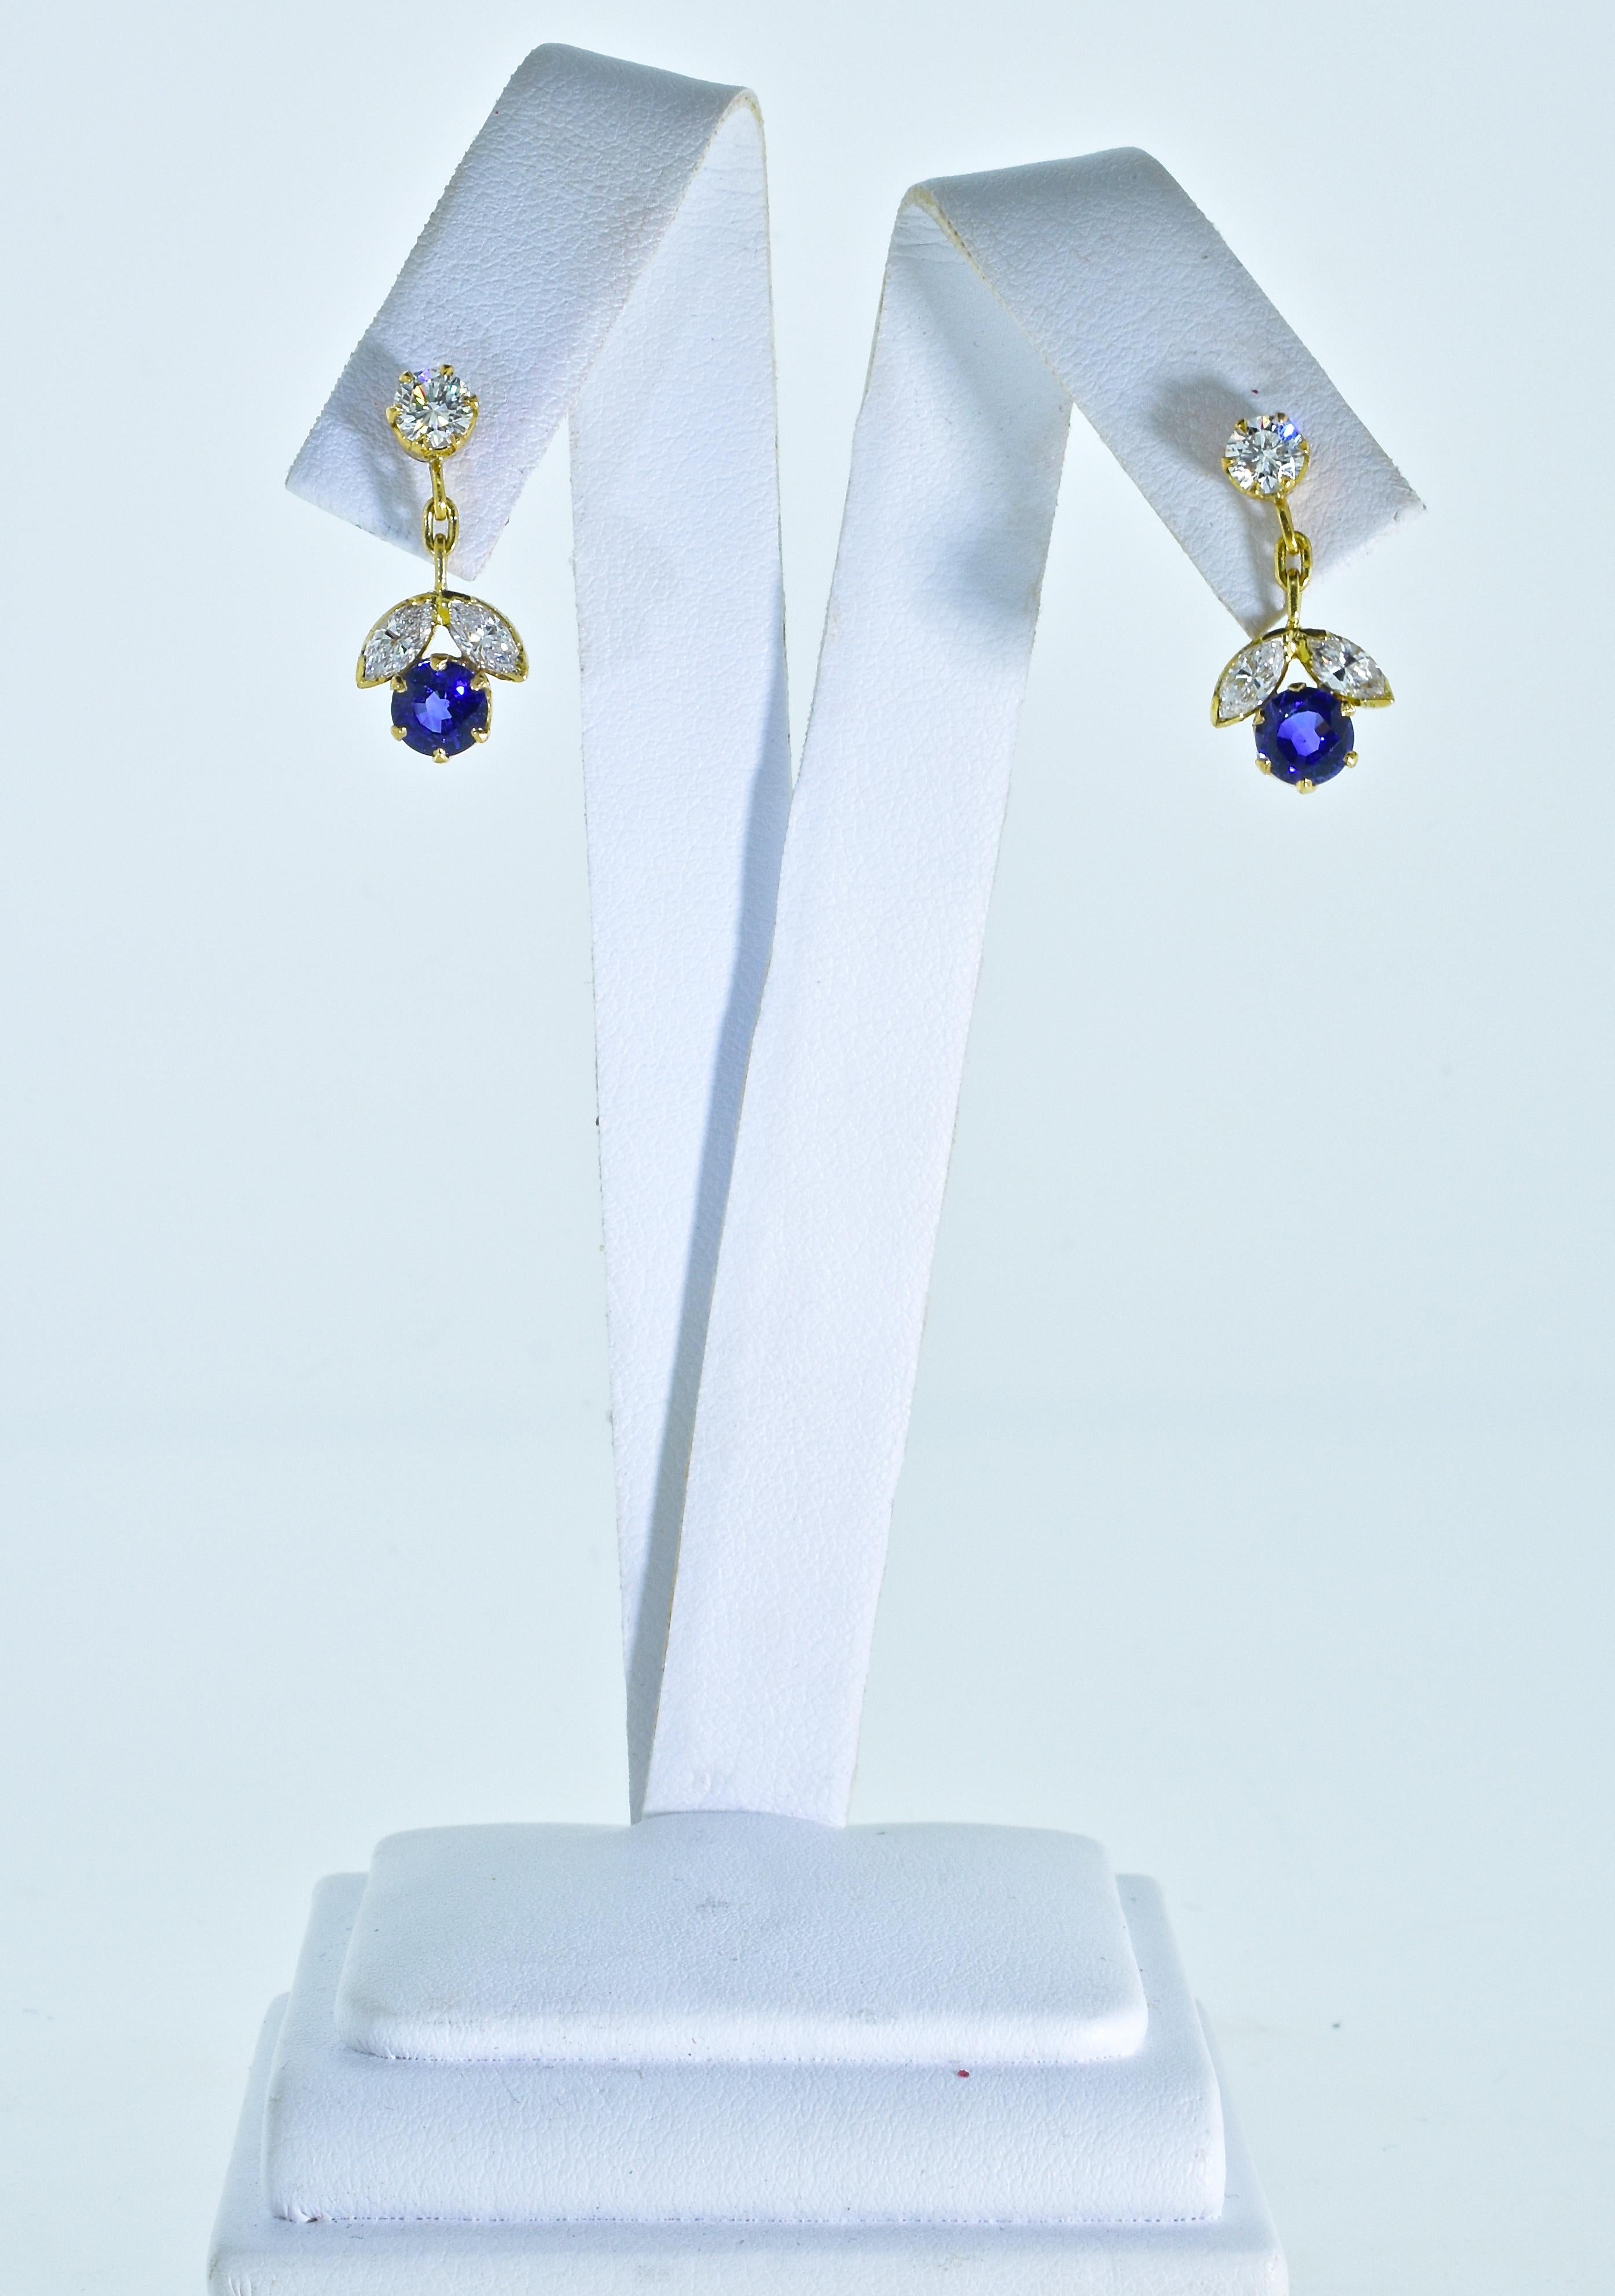 Brilliant Cut Sapphire and Diamond 18 Karat Earrings